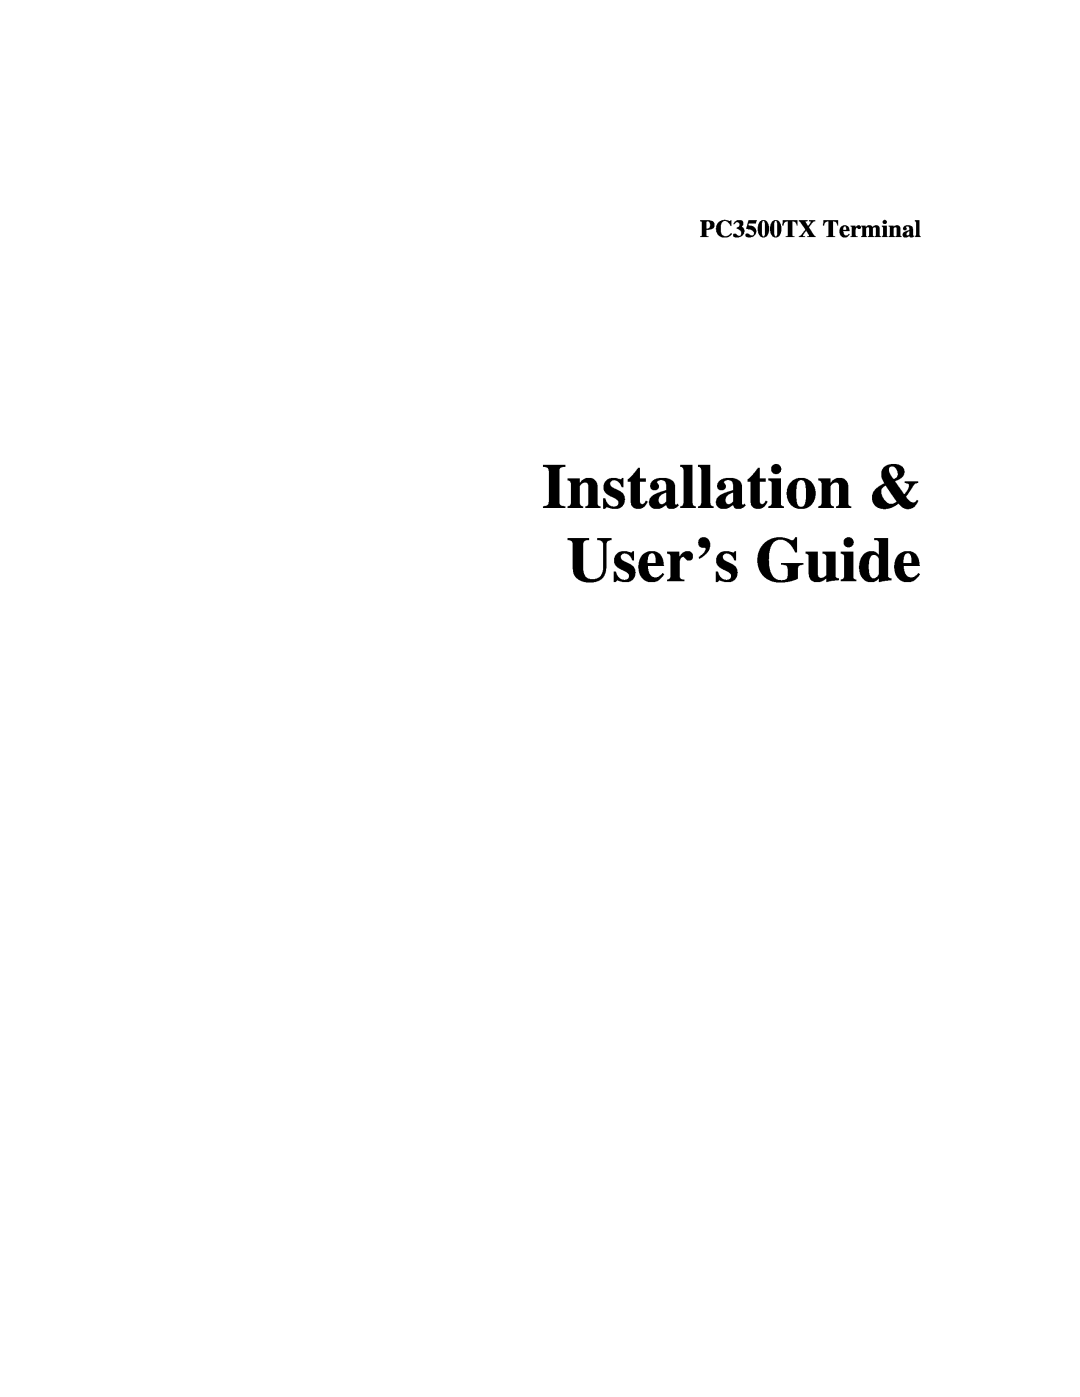 Lathem manual PC3500TX Terminal, Installation & User’s Guide 